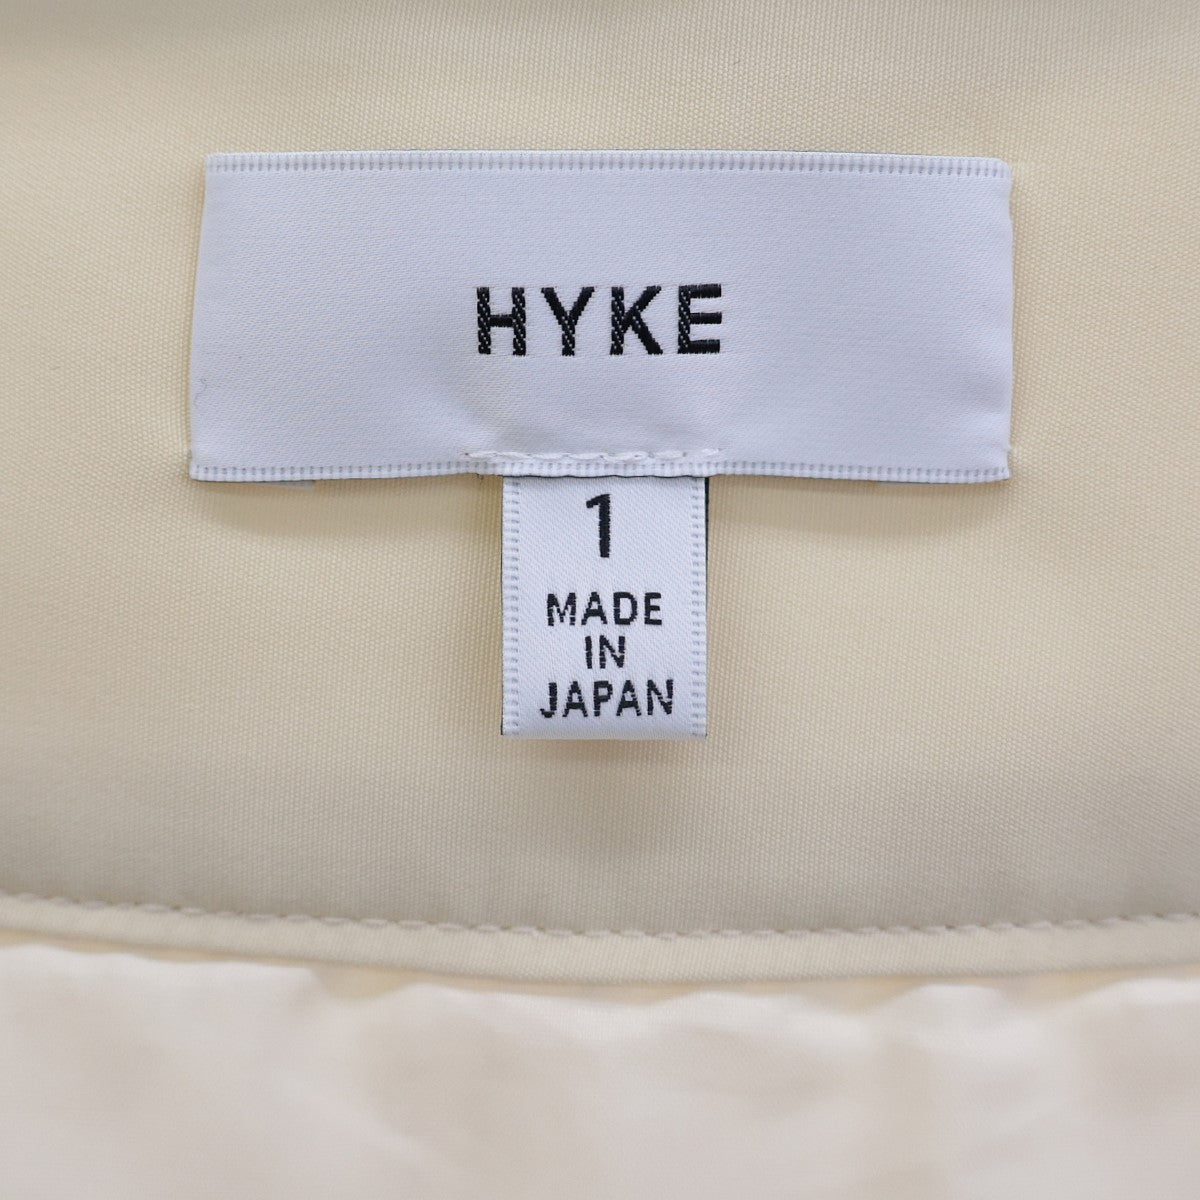 HYKE(ハイク) PLEATED SKIRTプリーツスカート192-14043 192-14043 ...